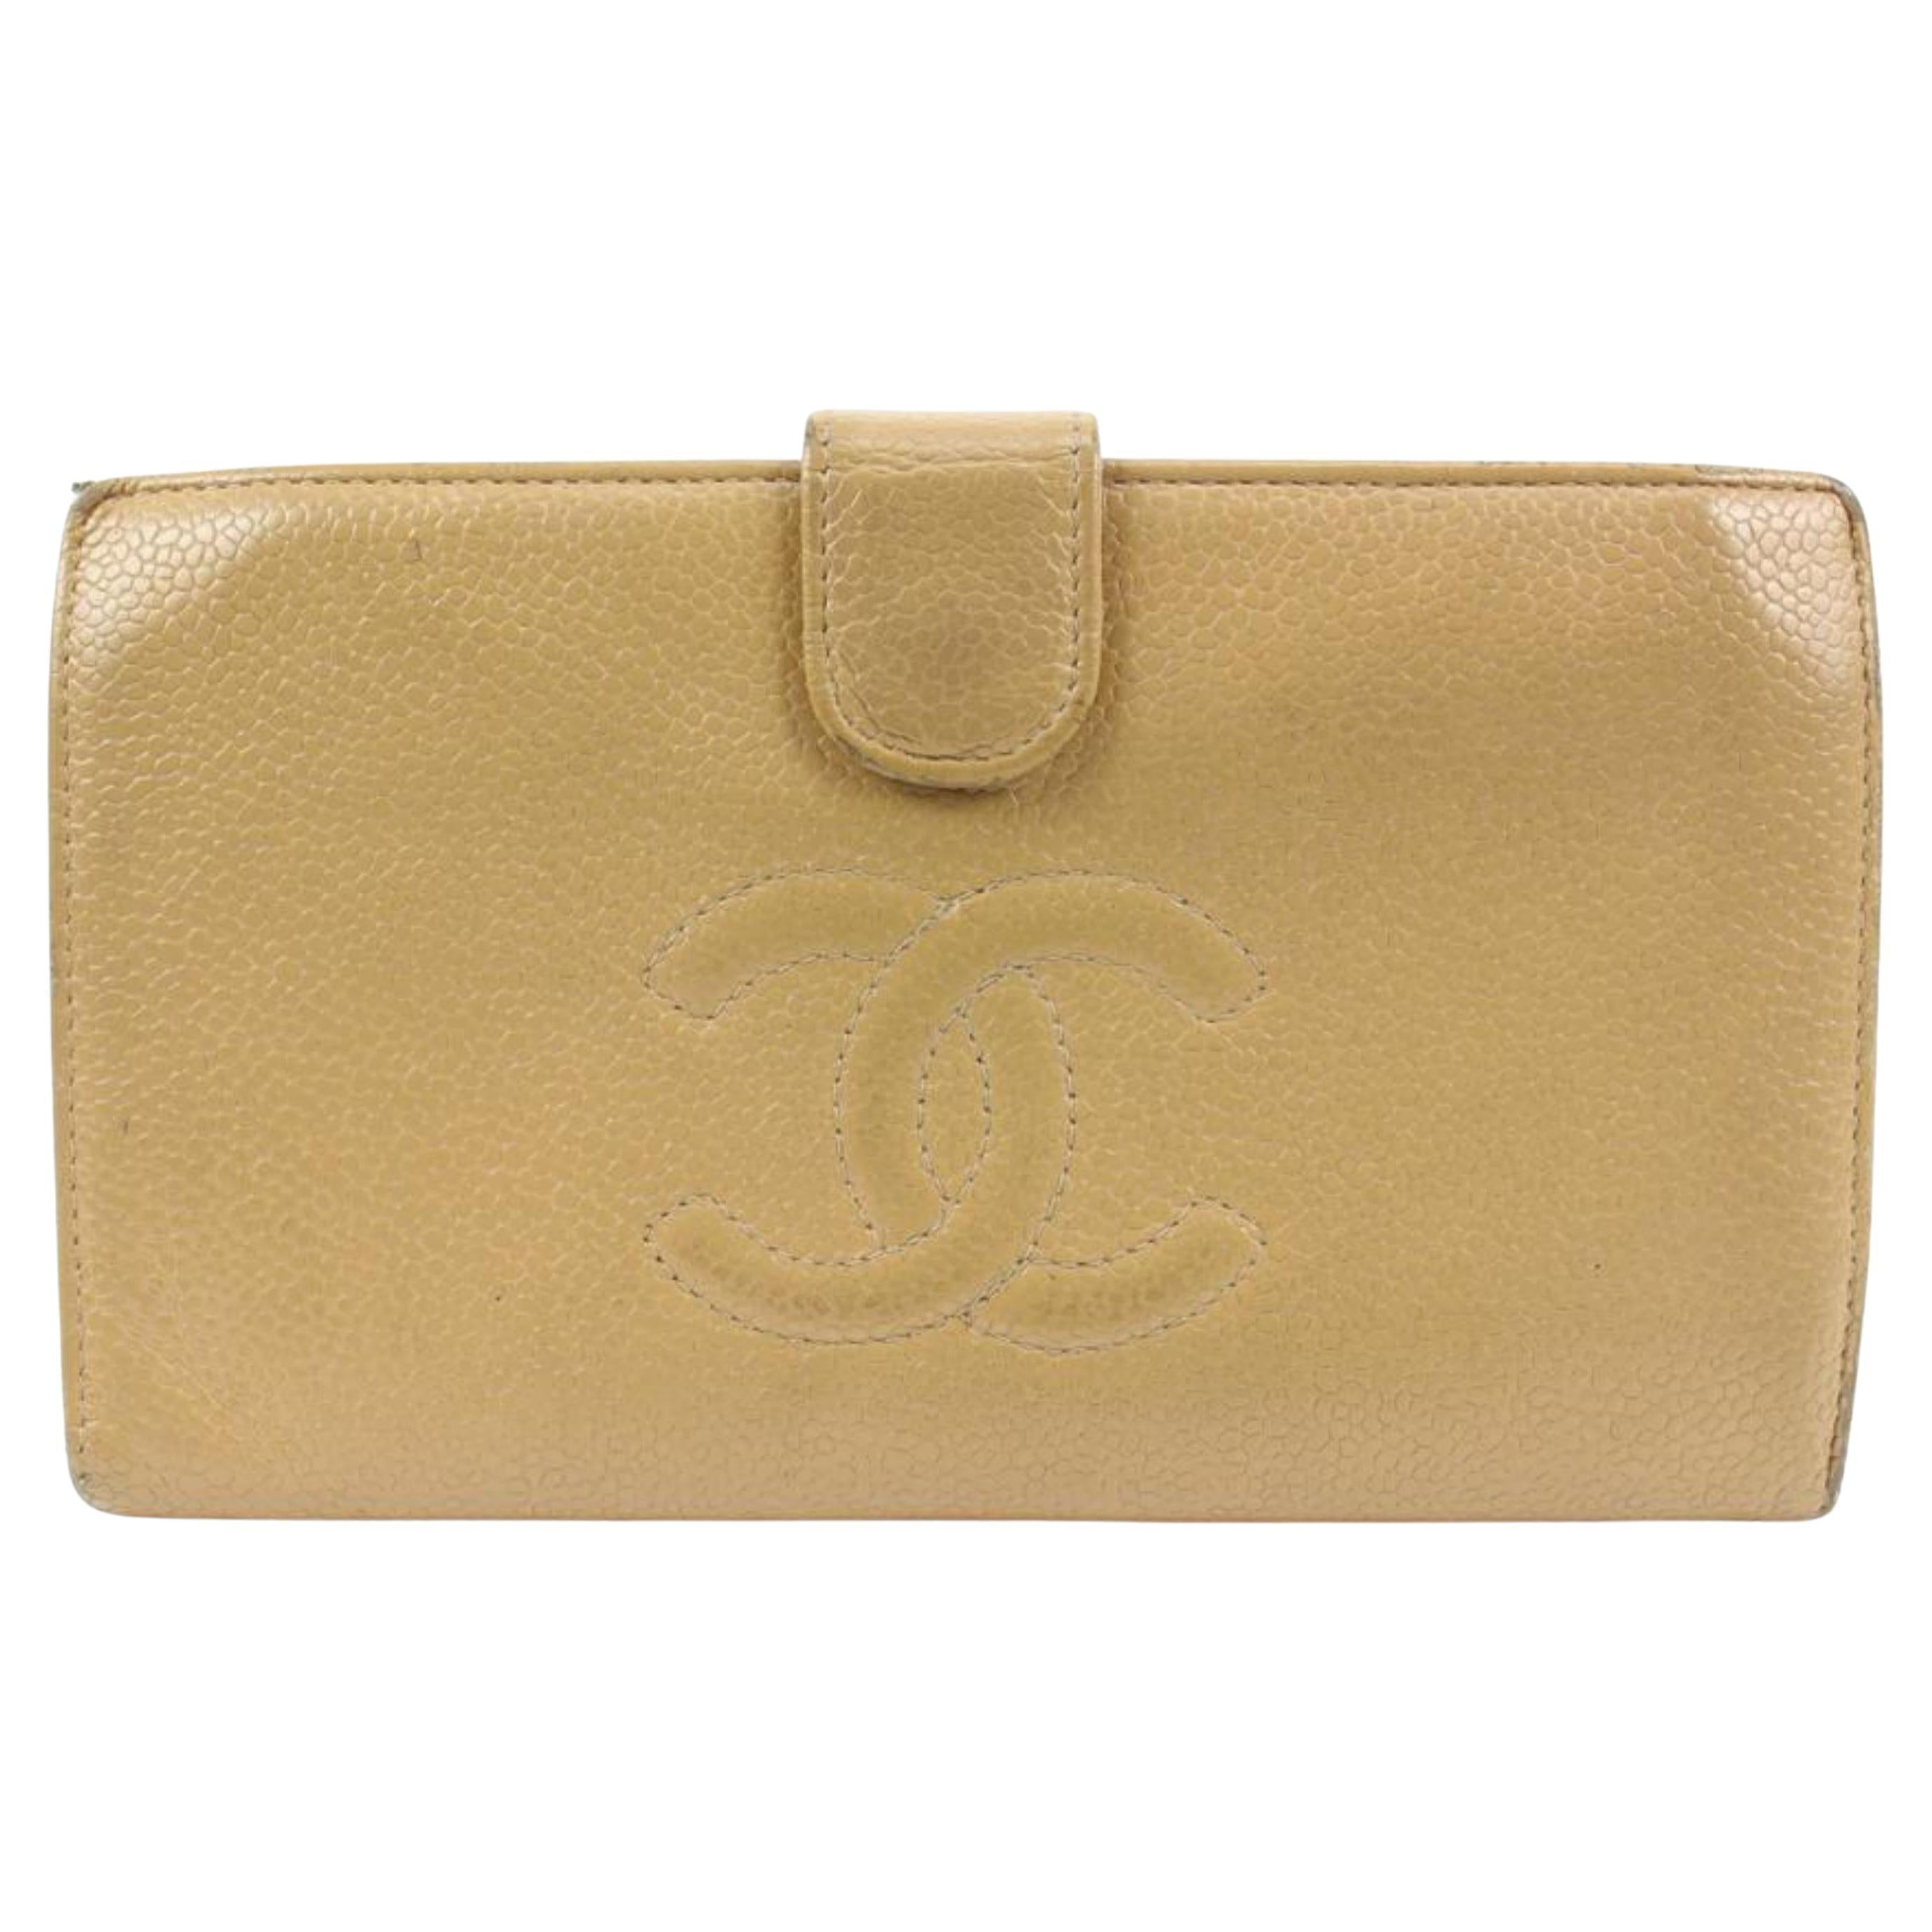 Chanel Beige Caviar Leather CC Logo Long Bifold Flap Wallet 41ck224s